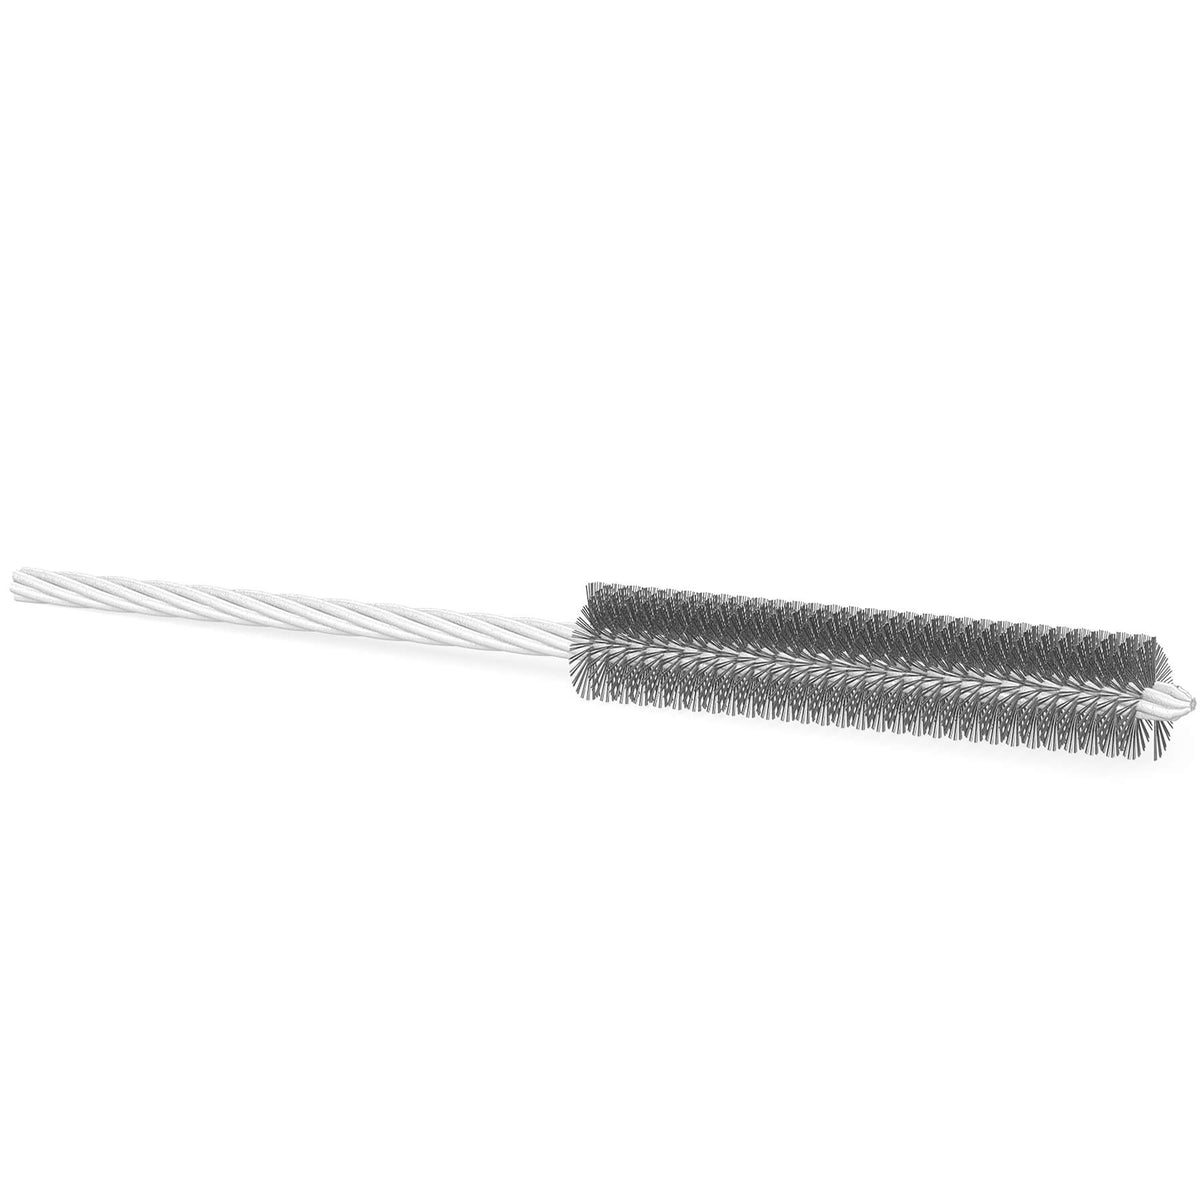 2-160820.10: Ø 17mm Drill Bit Cleaning Brush (10 Piece Pack)